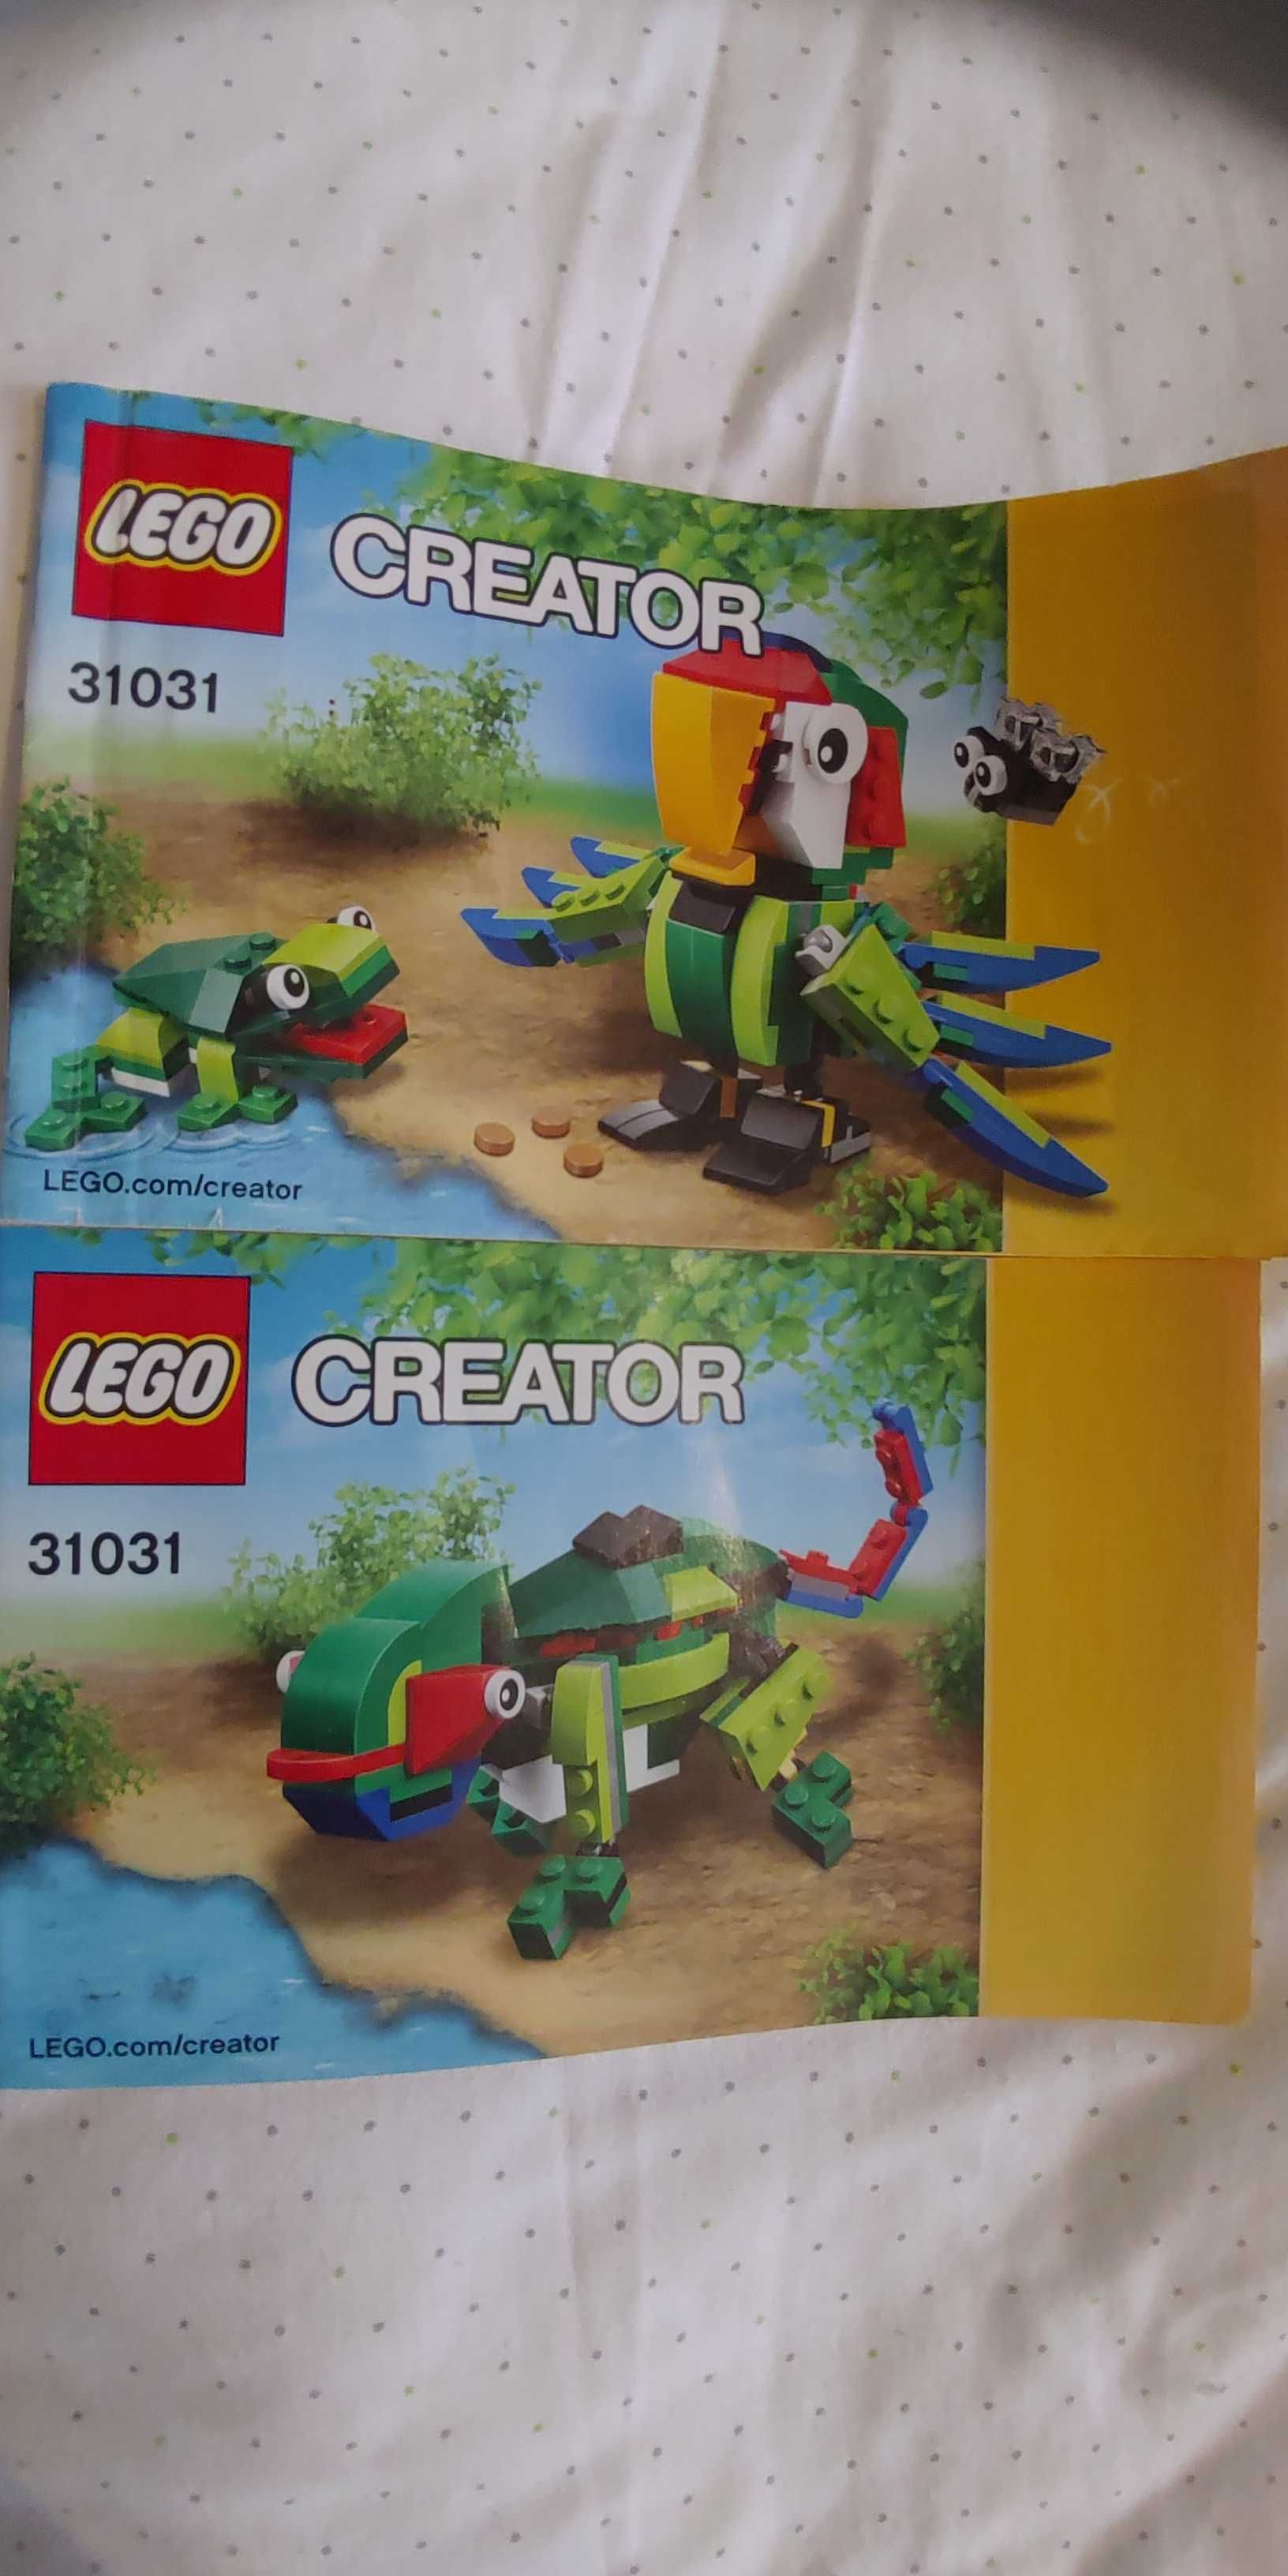 LEGO CREATOR 31031 Instrukcja.